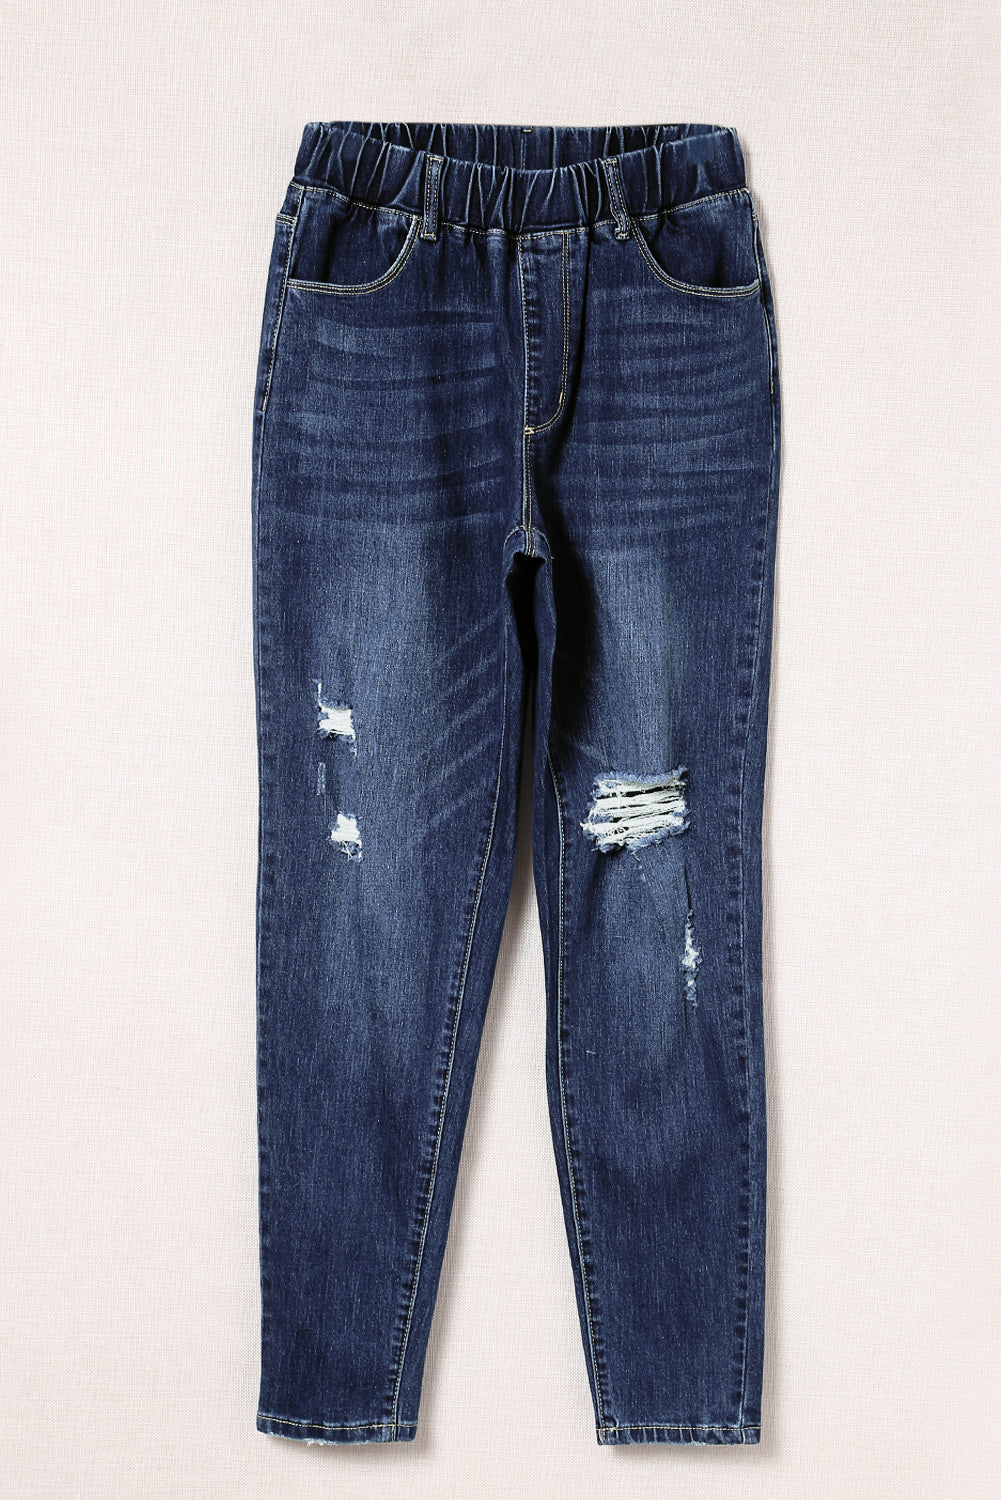 Blue Distressed High Waist Skinny Jeans Blue 78%Cotton+20%Polyester+2%Elastane Jeans JT's Designer Fashion